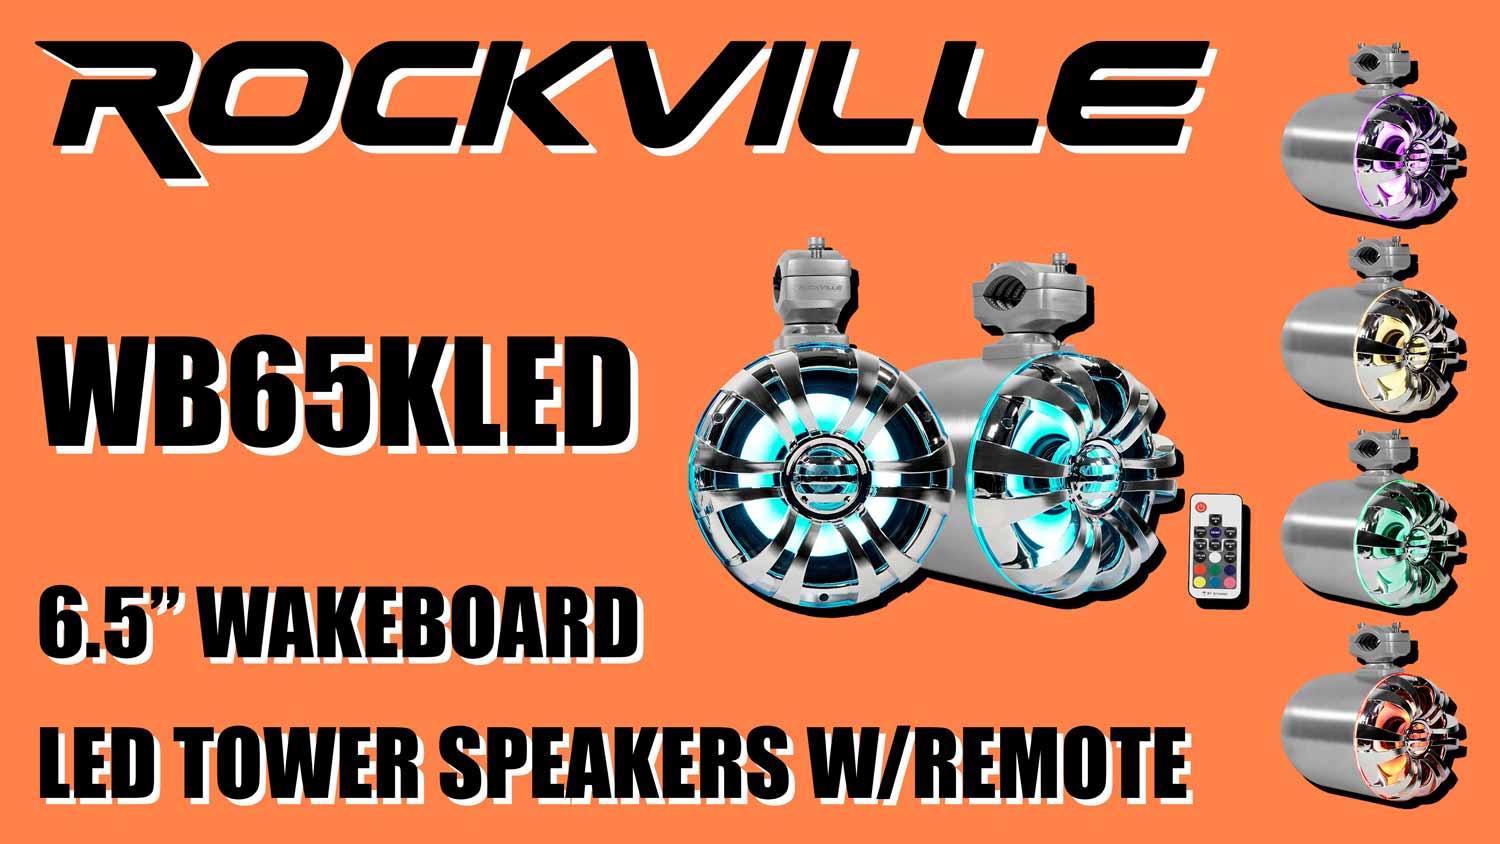 2) Rockville WB65LED 6.5